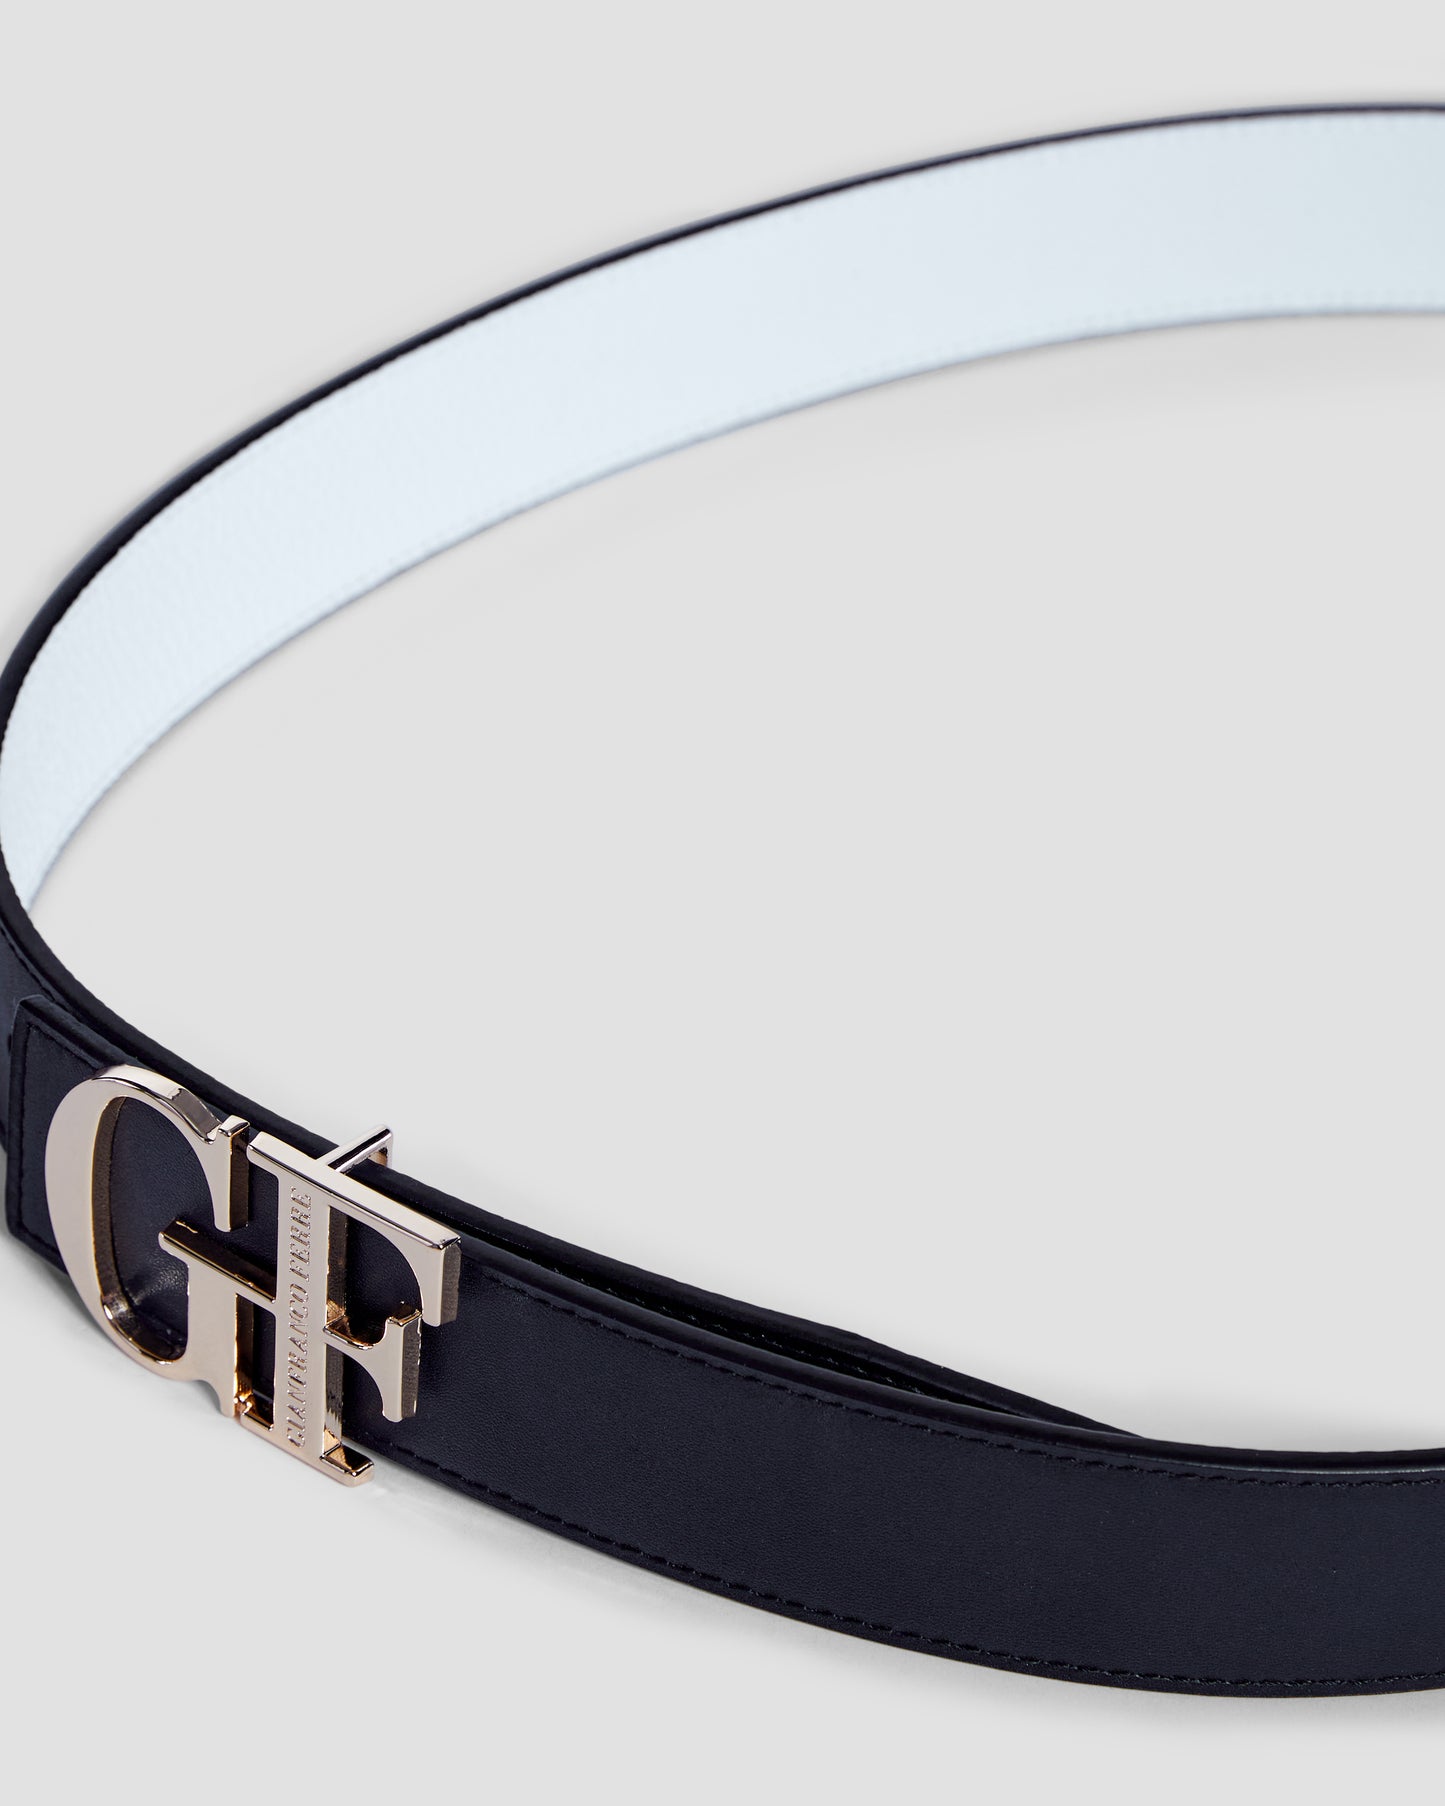 GF Monogram Belt